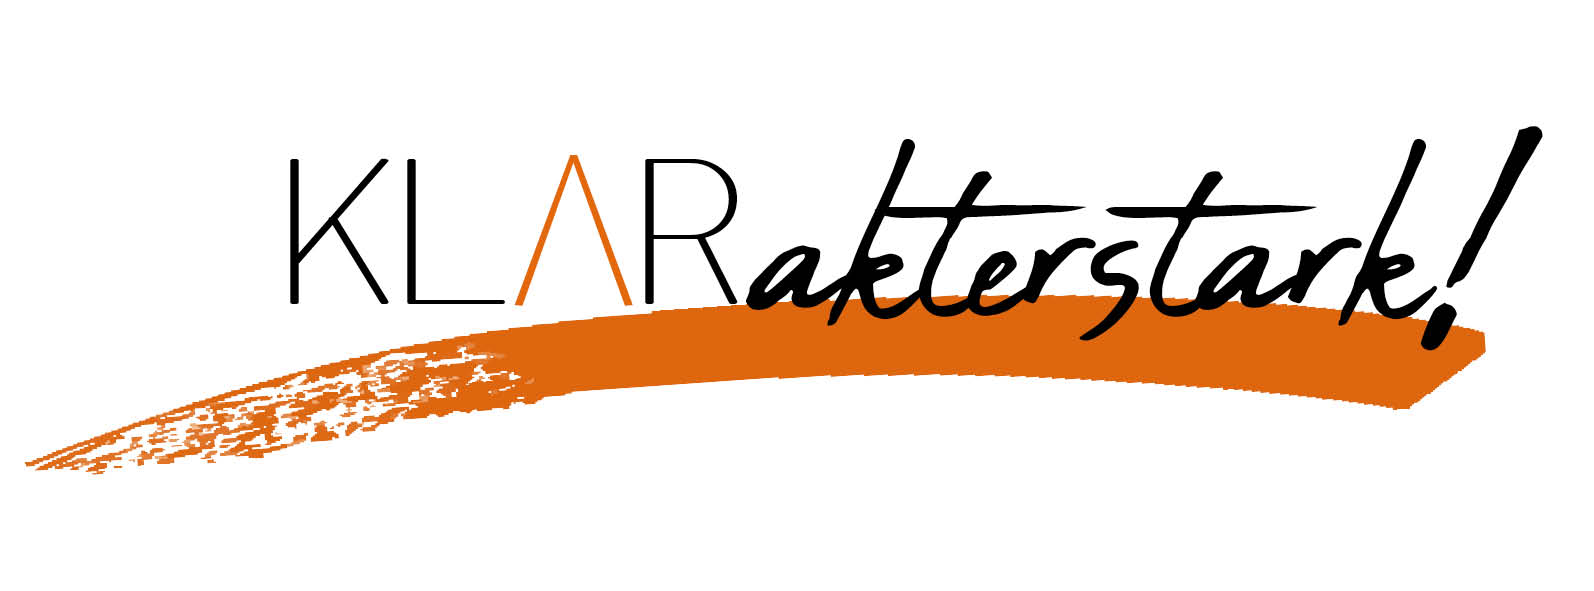 Klarakterstark-Werbeagentur-Marketing-logo-final